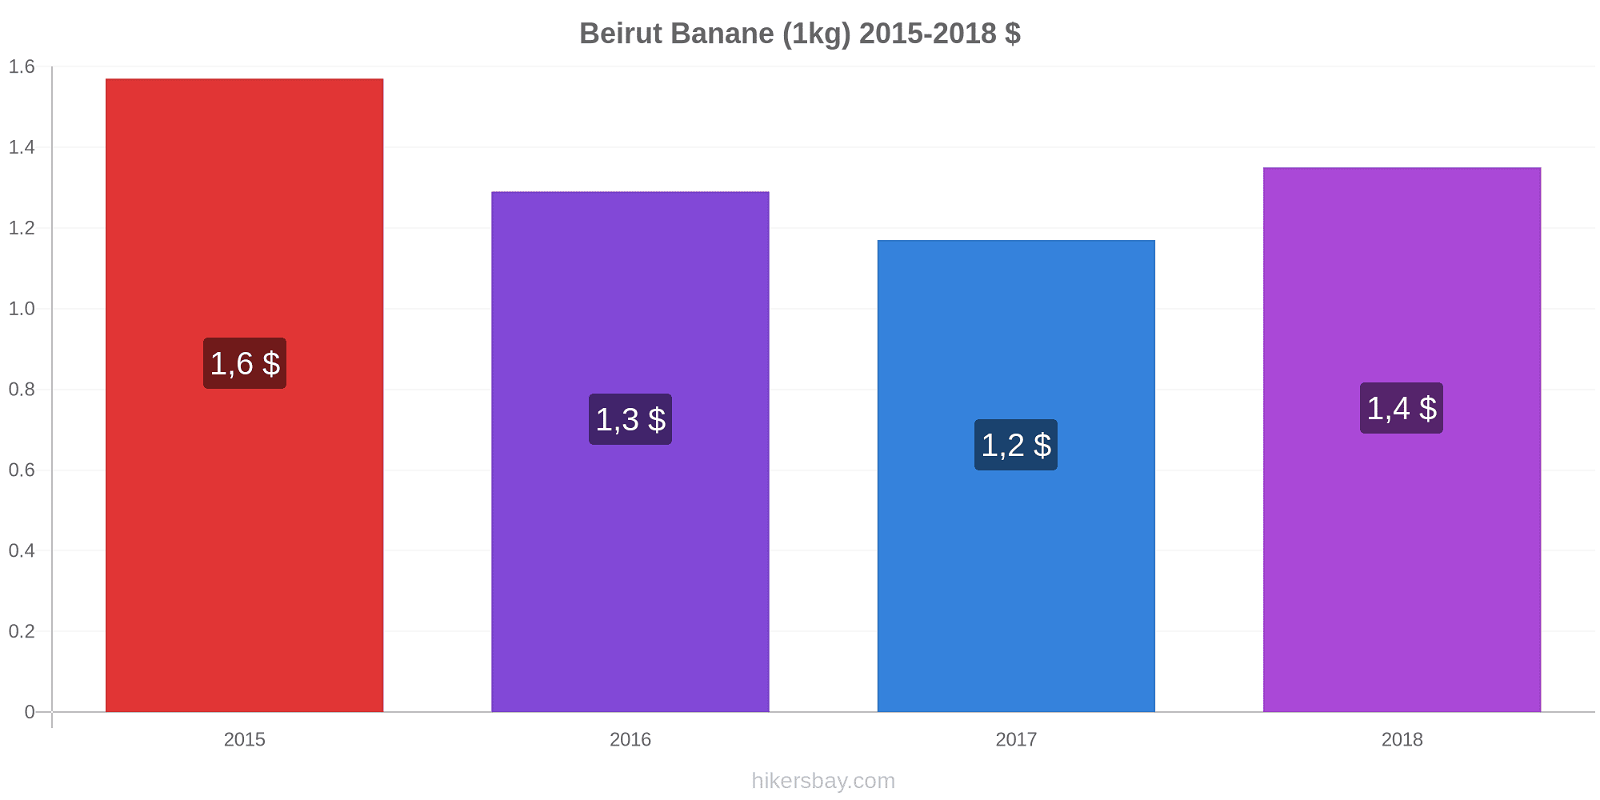 Beirut Preisänderungen Banane (1kg) hikersbay.com